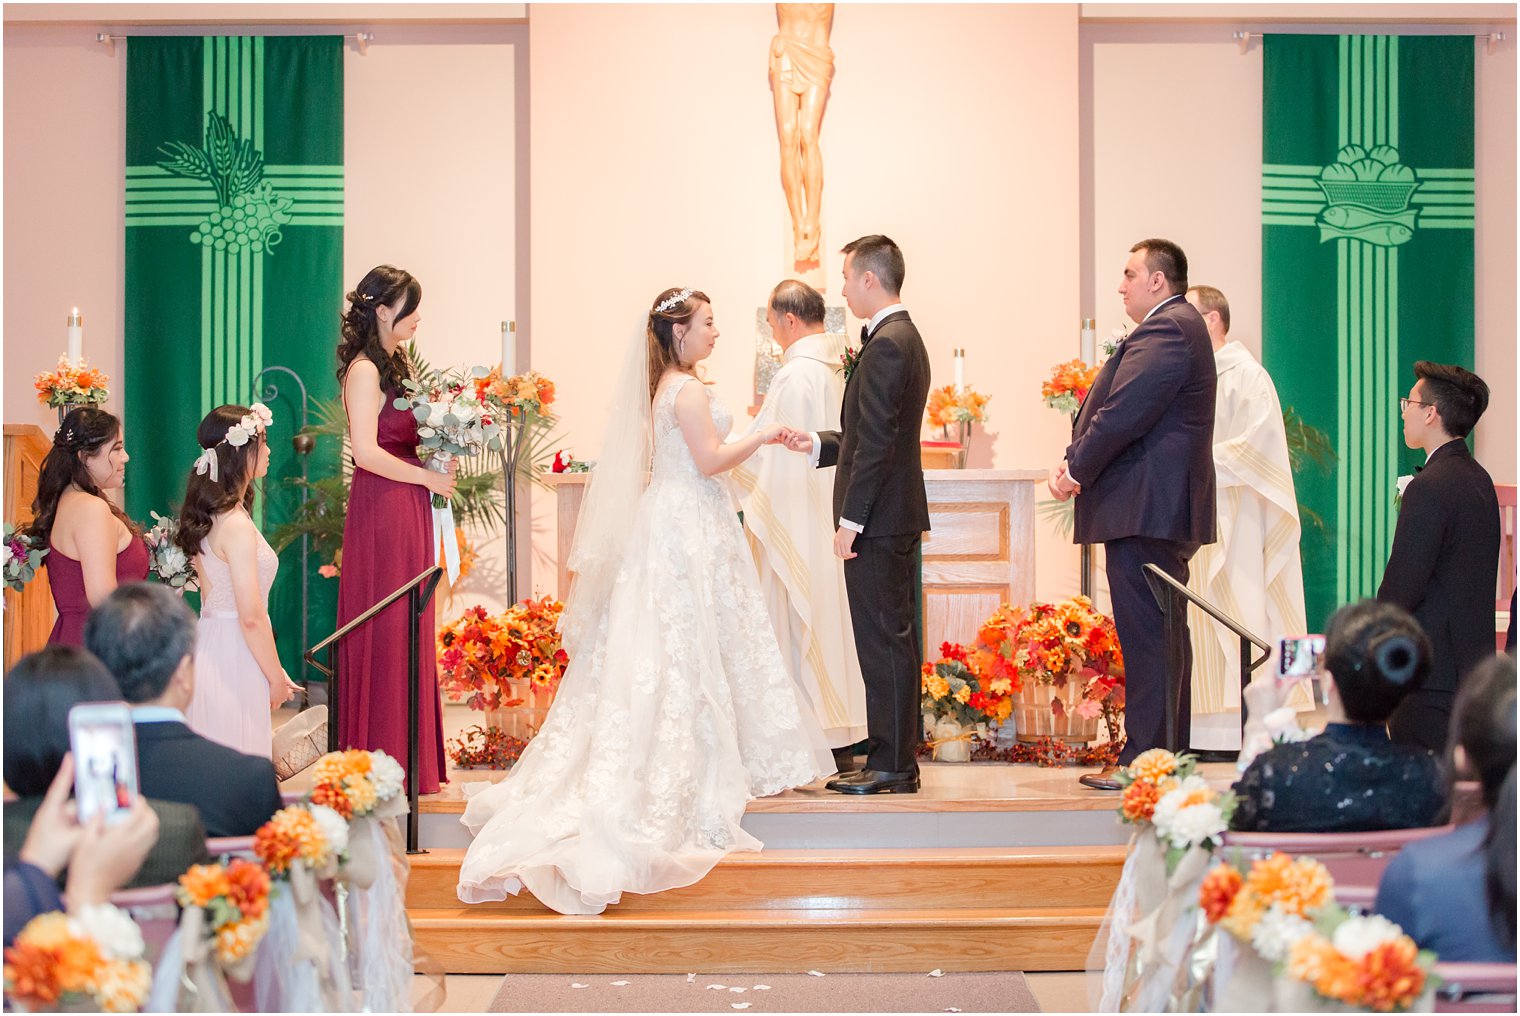 Wedding ceremony at the Church of Saint Katherine Drexel in Egg Harbor Township, NJ